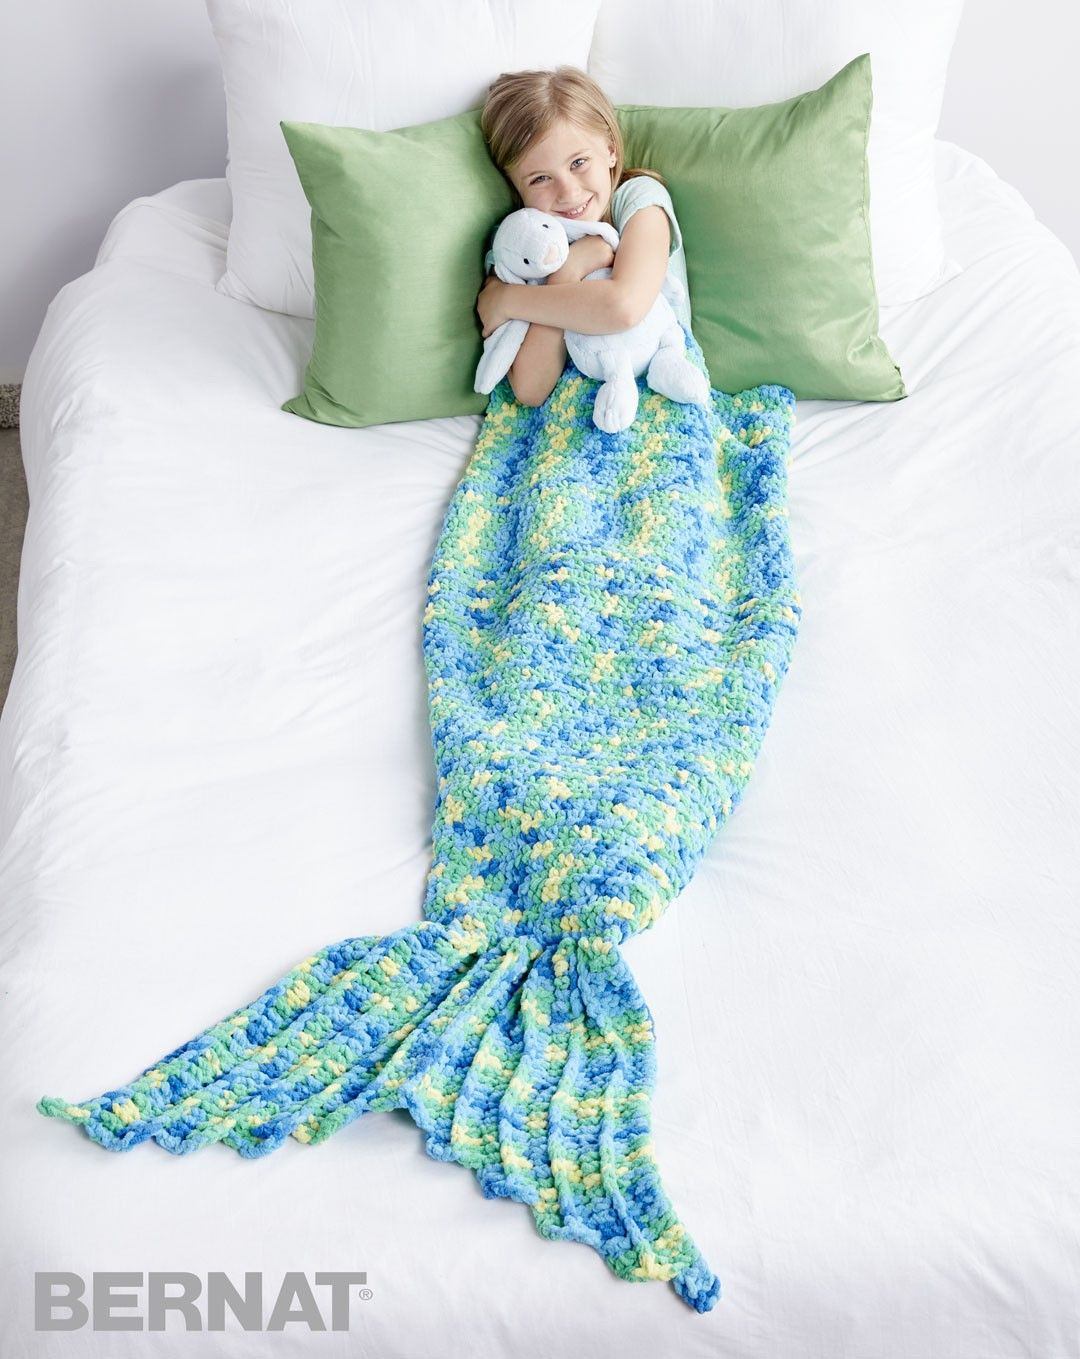 Mermaid Crochet Pattern For Baby My Mermaid Crochet Snuggle Sack Easy Free Pdf Instructions